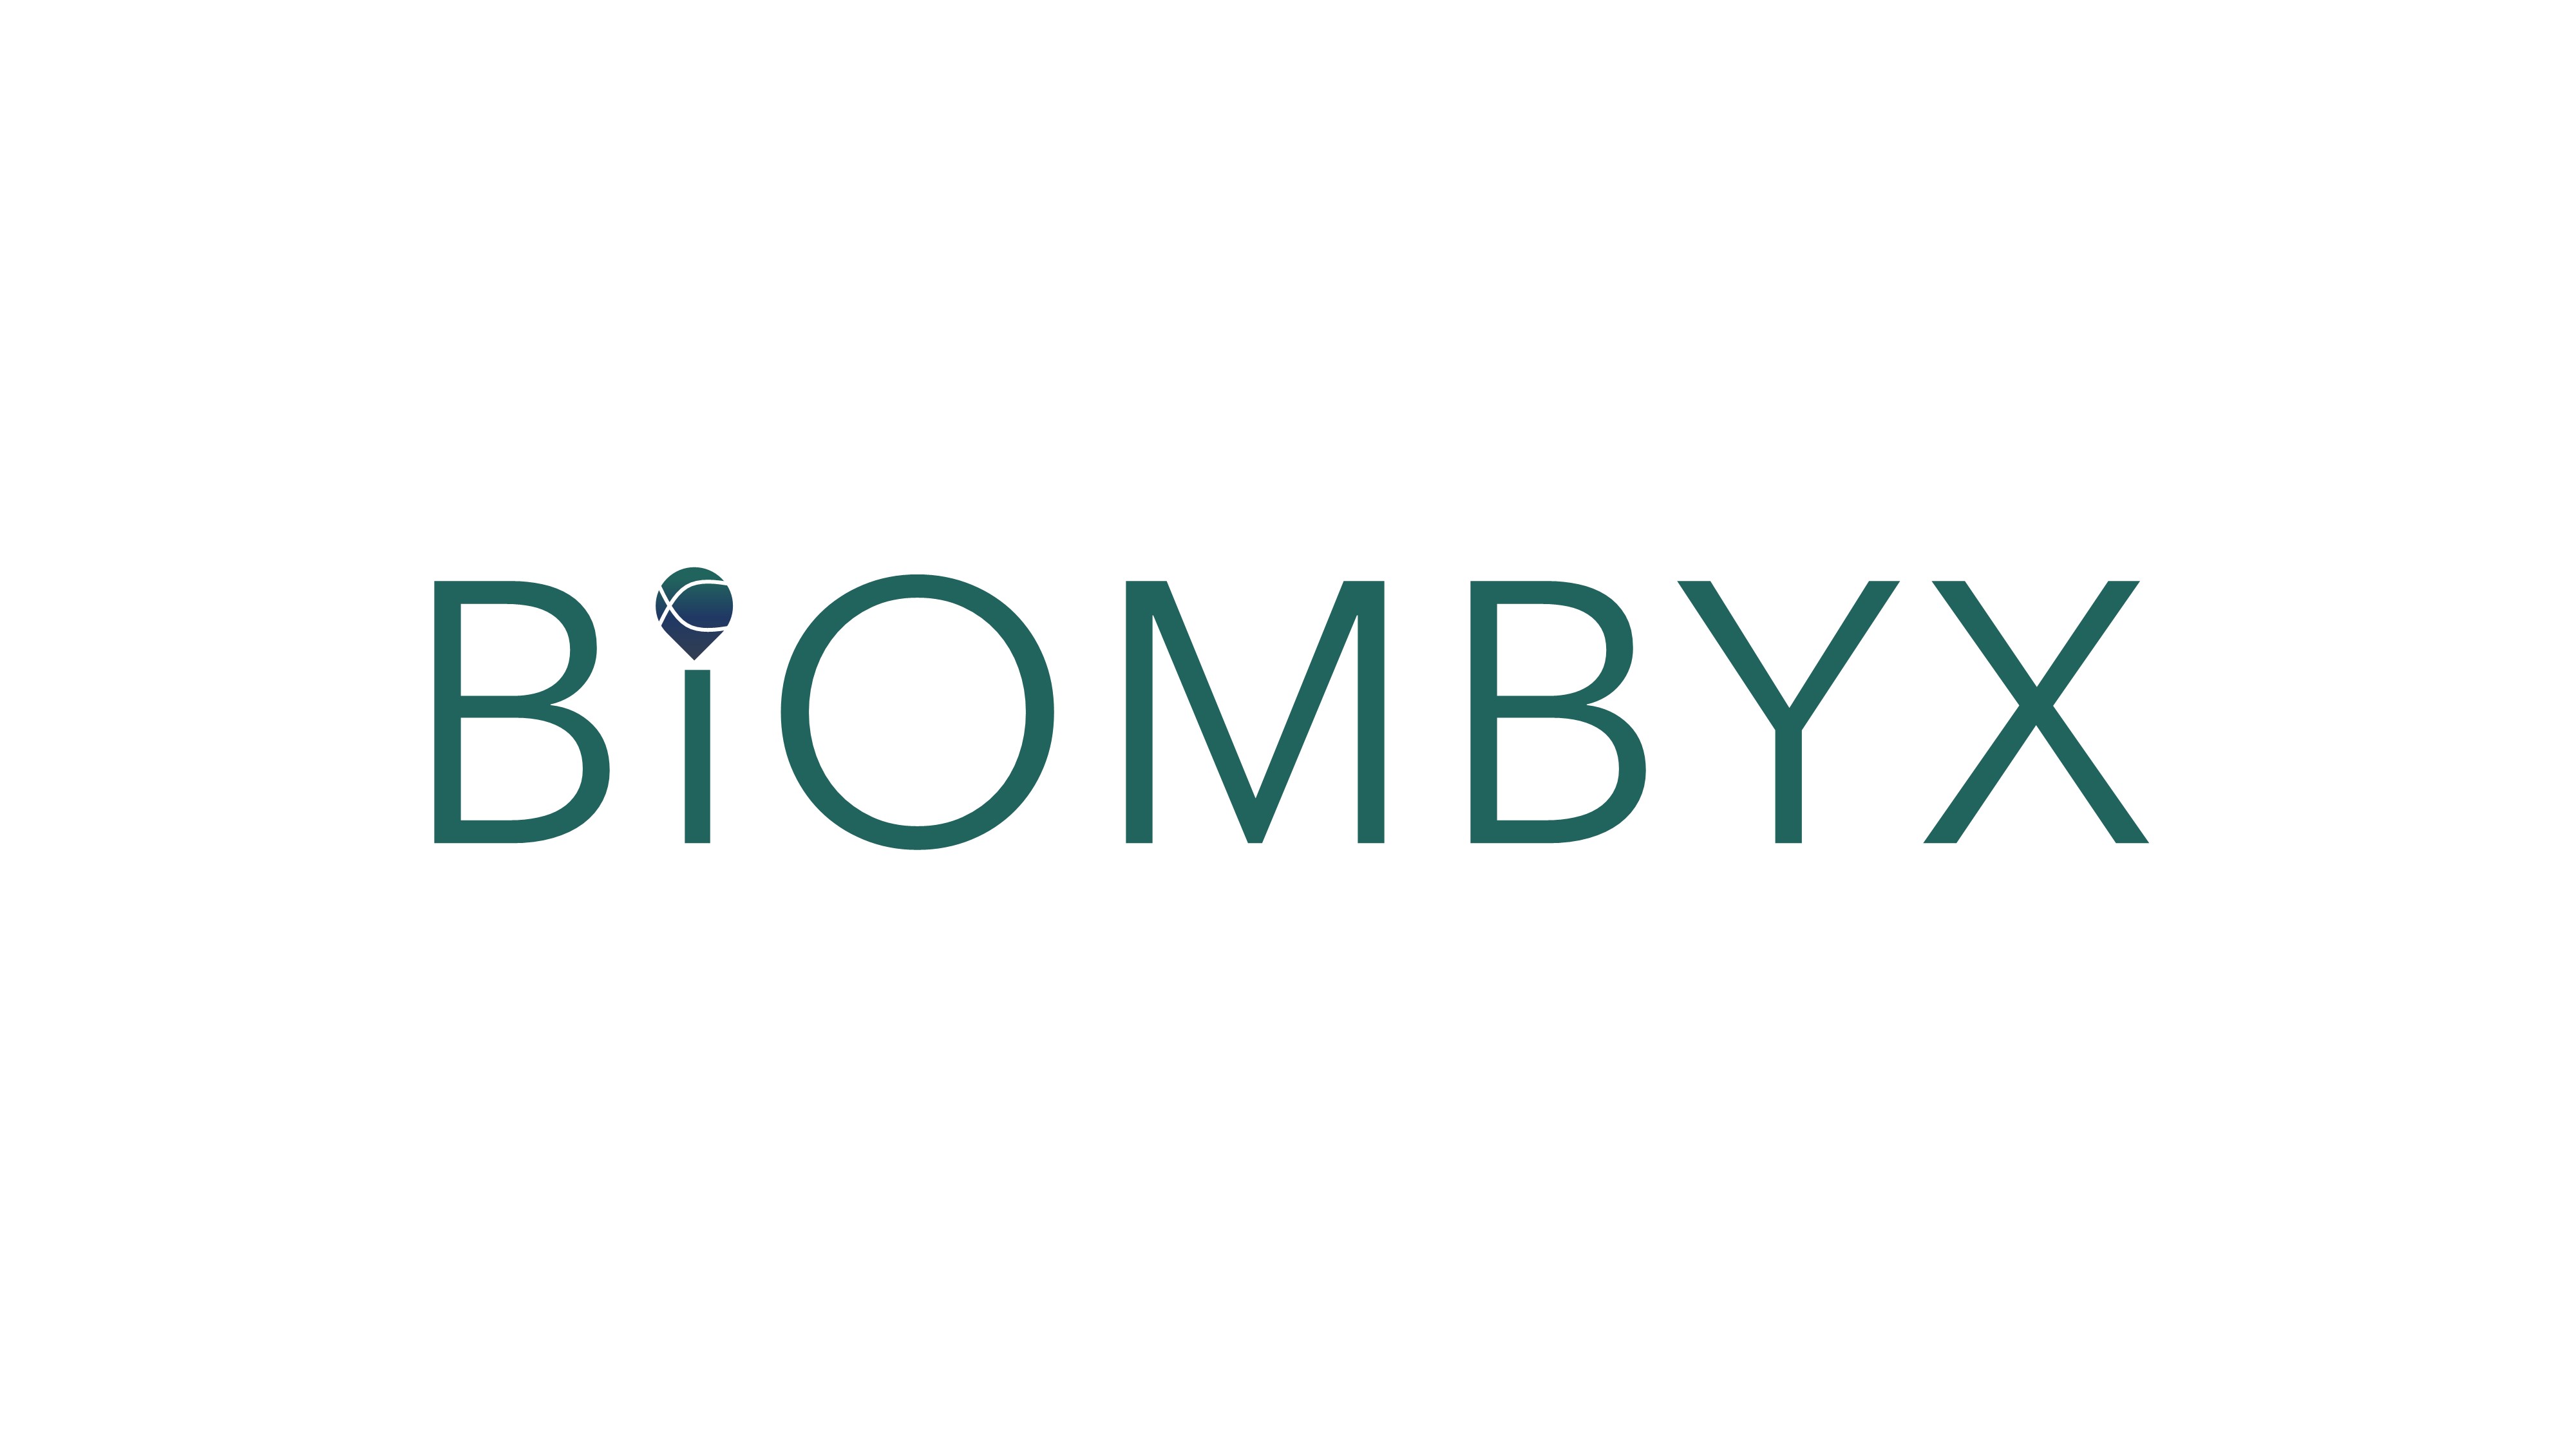 biombyx-logo.jpg